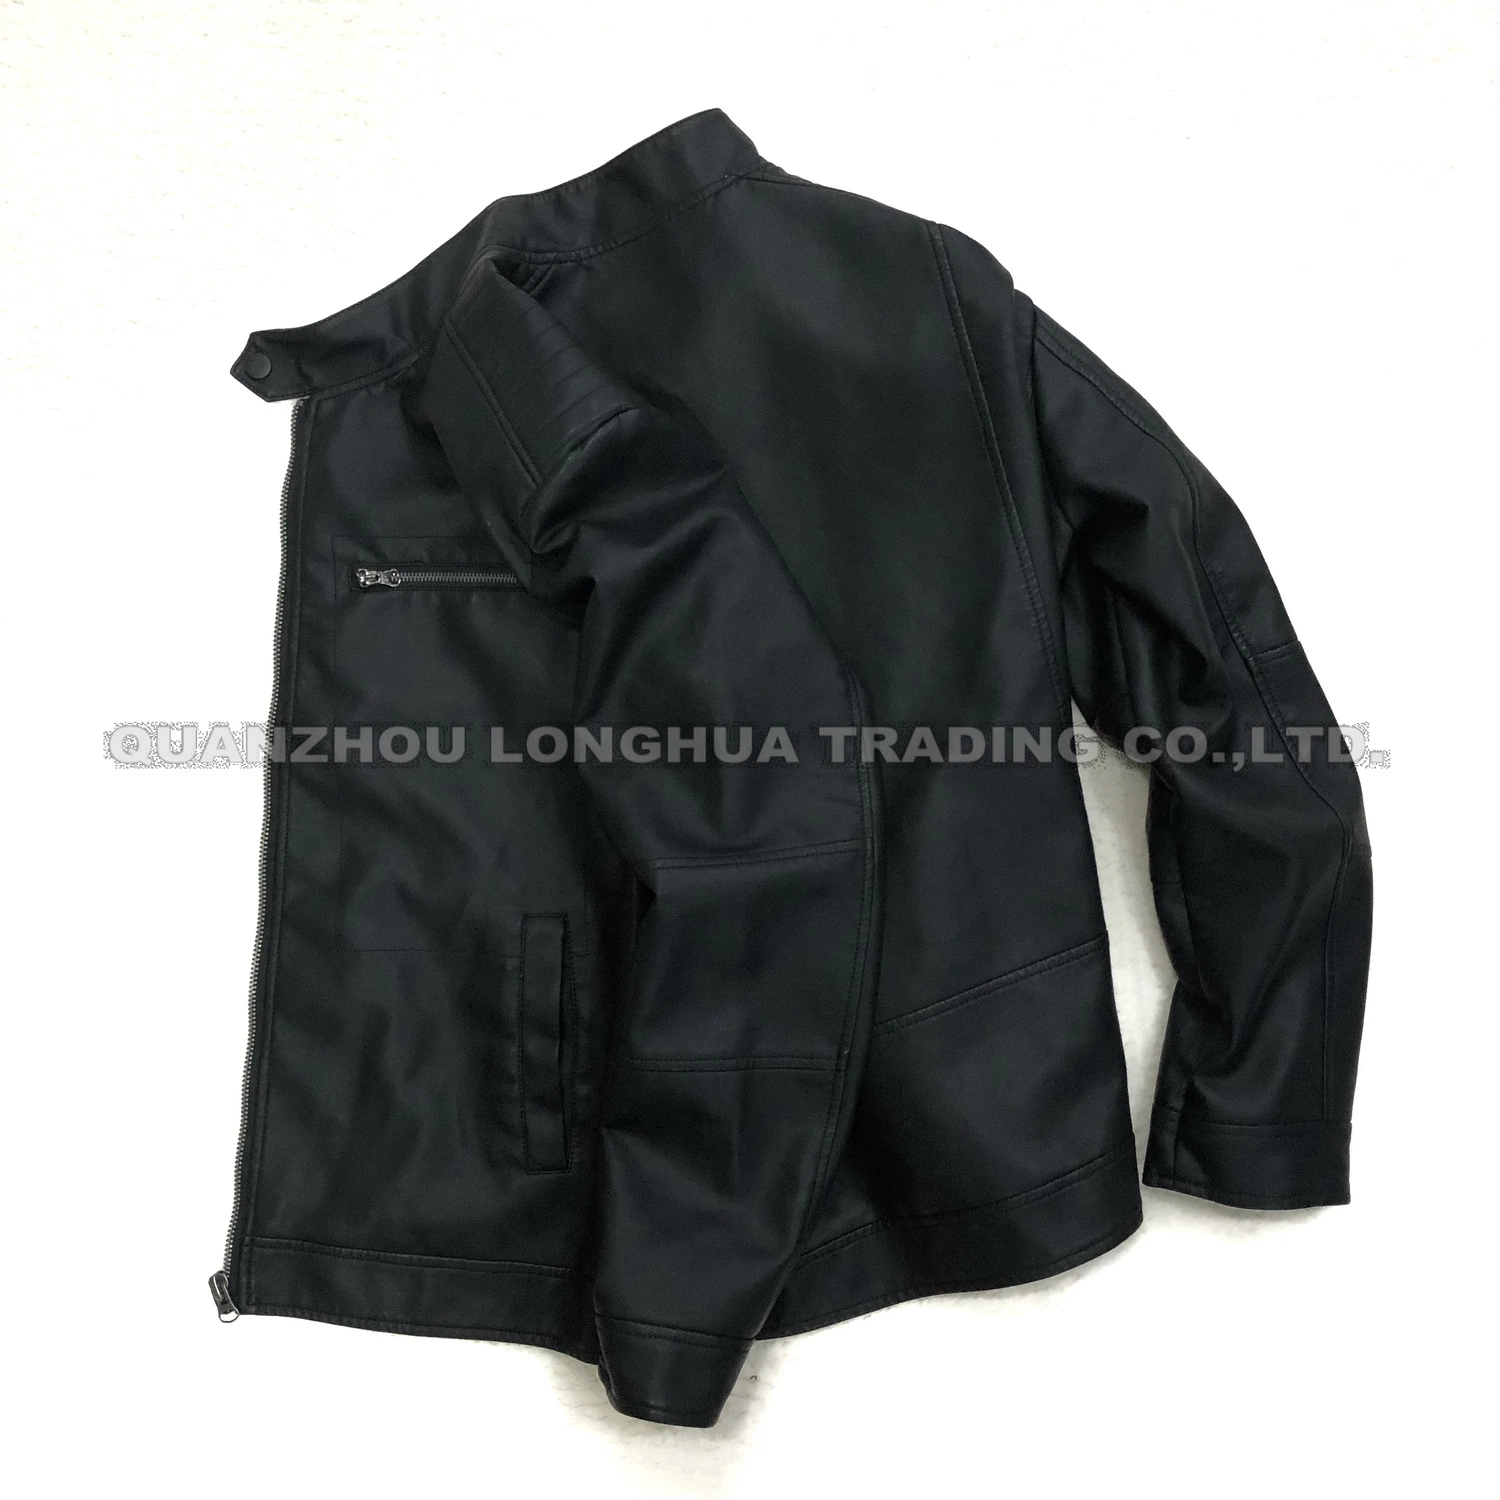 Мужская куртка Boy Jacket Новая стированная кожаная одежда Black PU Одежда одежда одежда одежда одежда Внешний халат